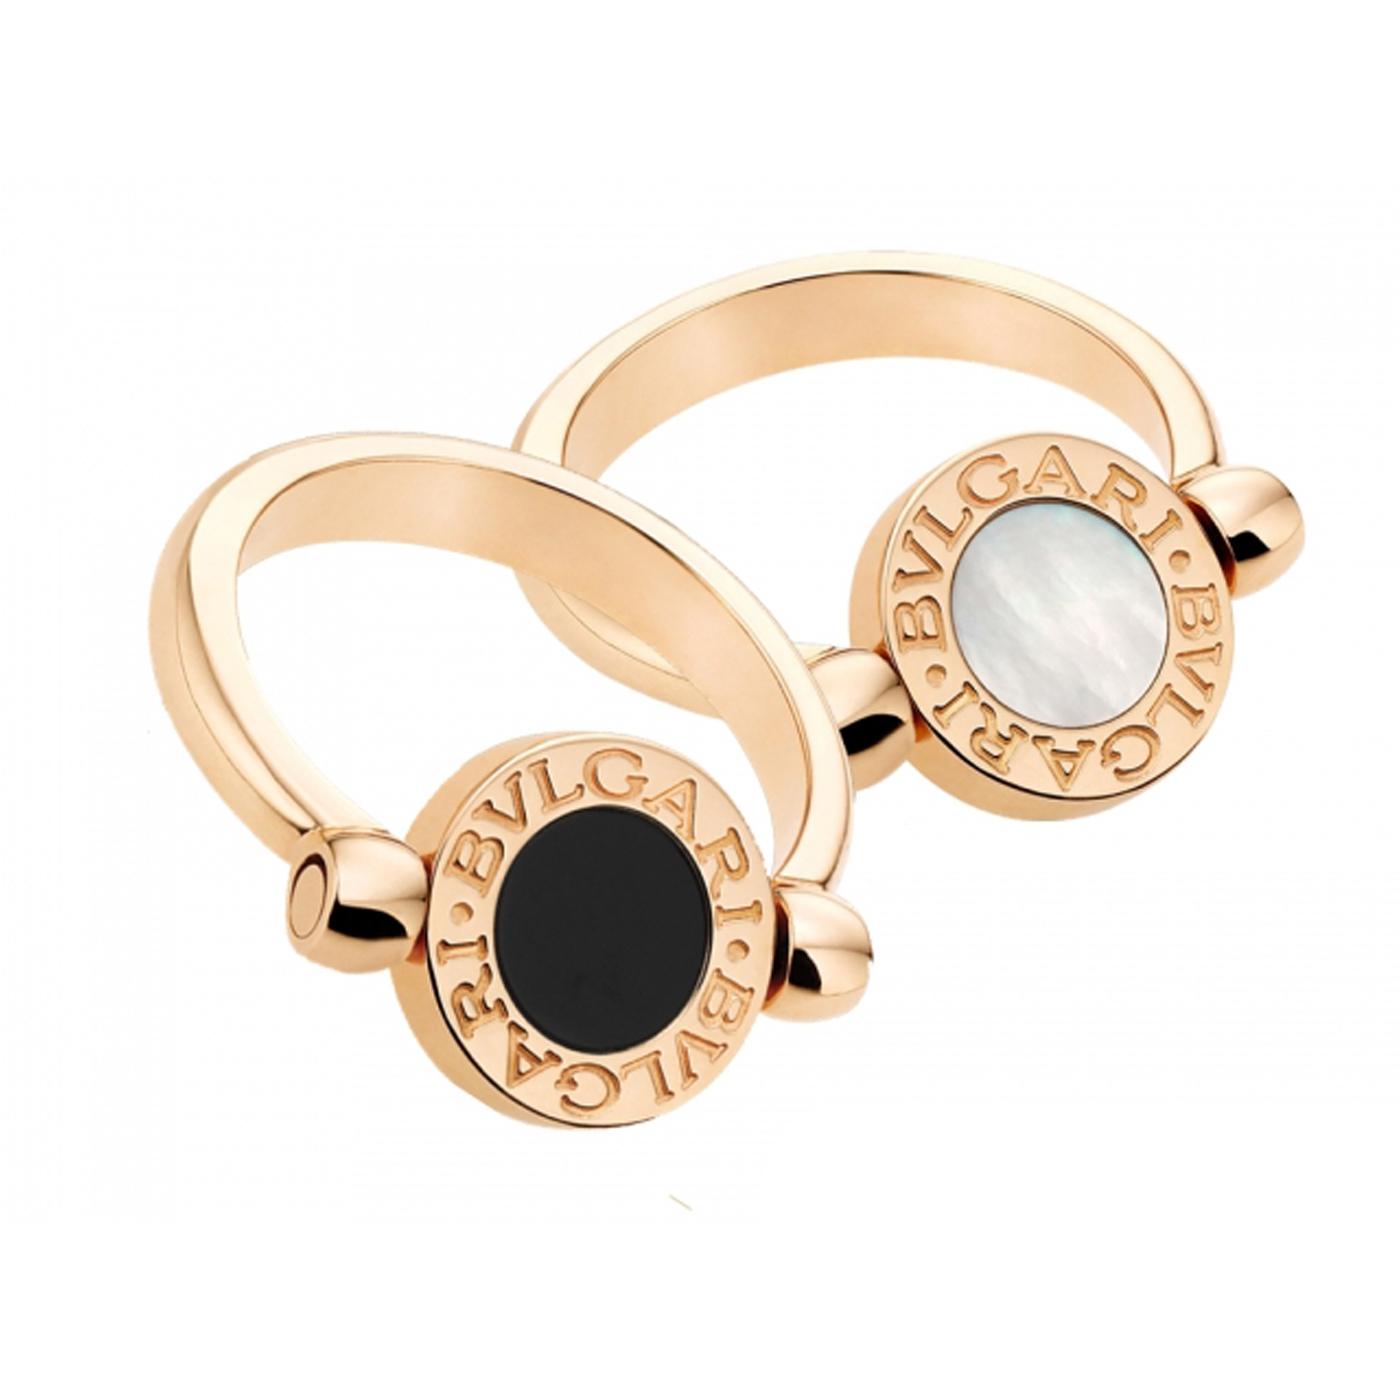 Bvlgari Jewelry Logo - Bvlgari Bvlgari 18K Rose Gold Flip Ring with Mother of Pearl and ...